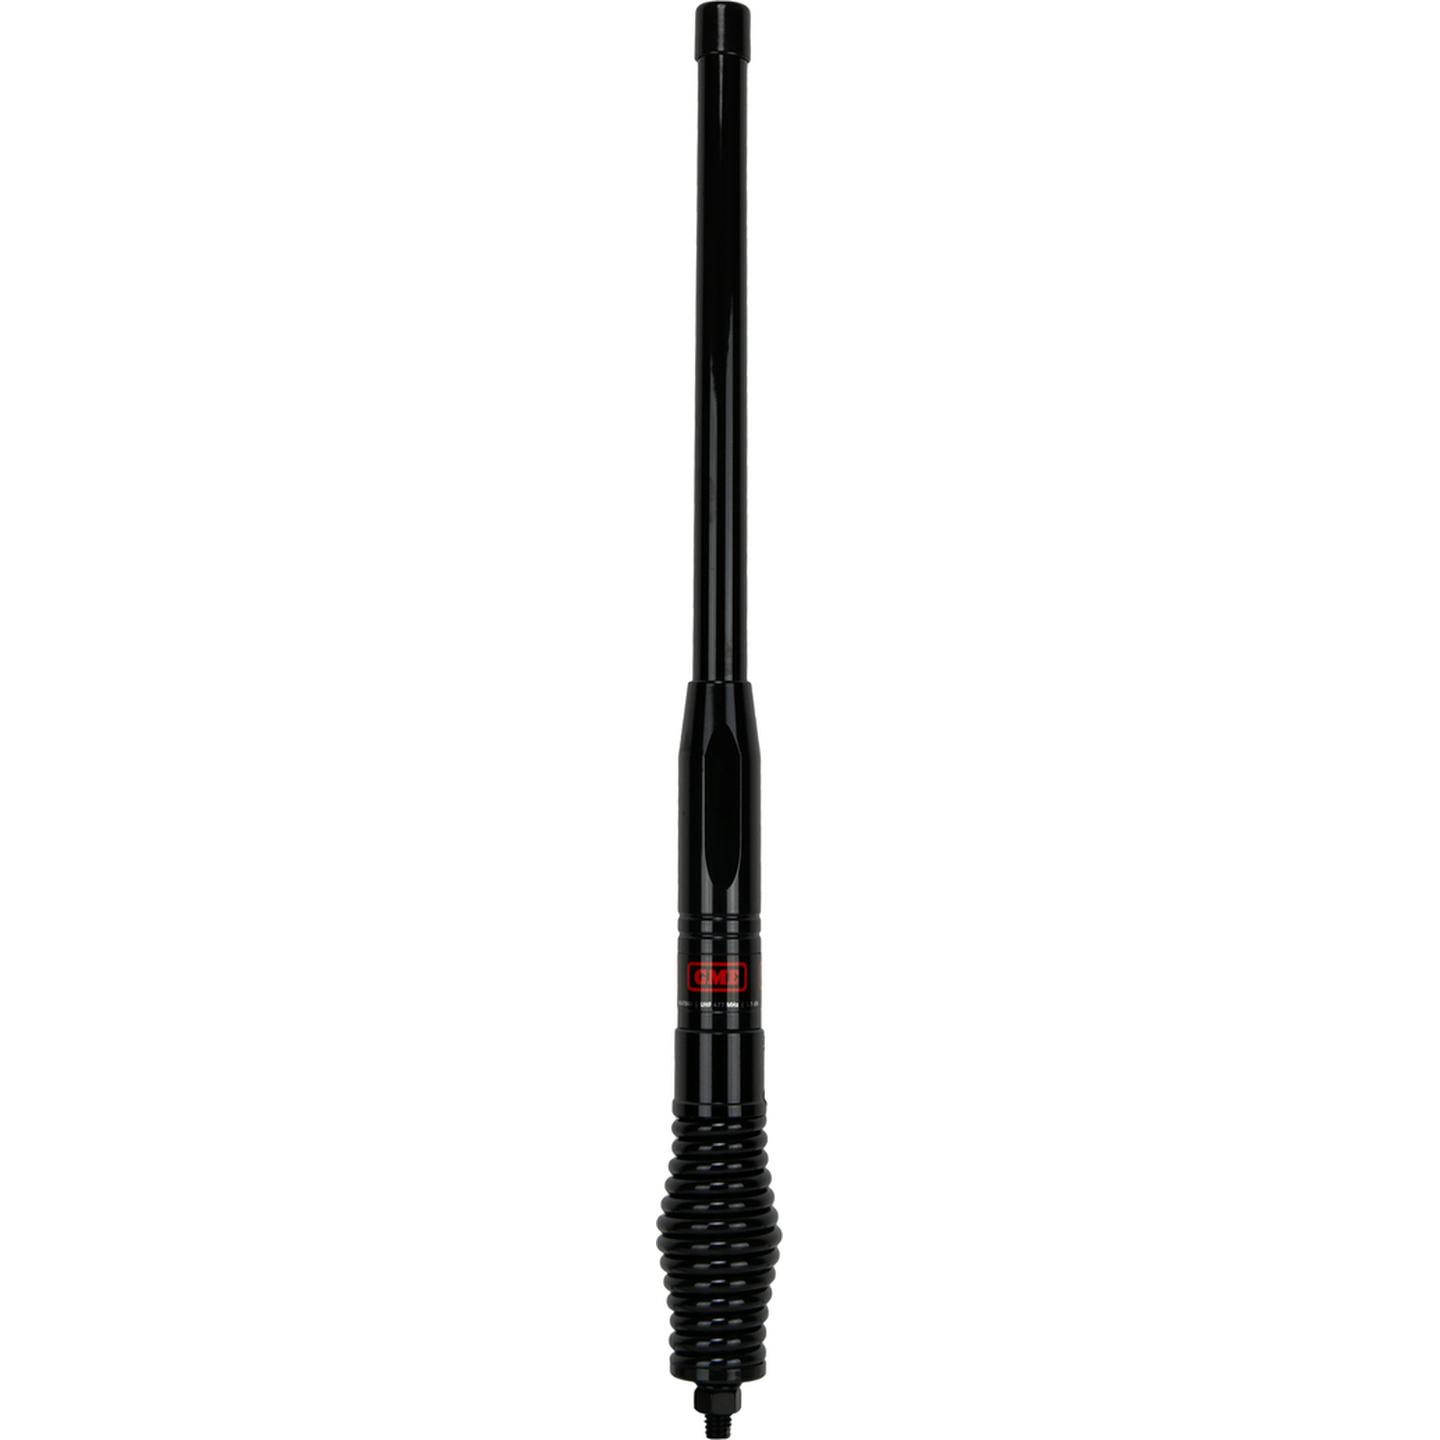 GME 580mm Heavy Duty Fibreglass Radome Antenna AS004B Spring 2.1dBi Gain - Black